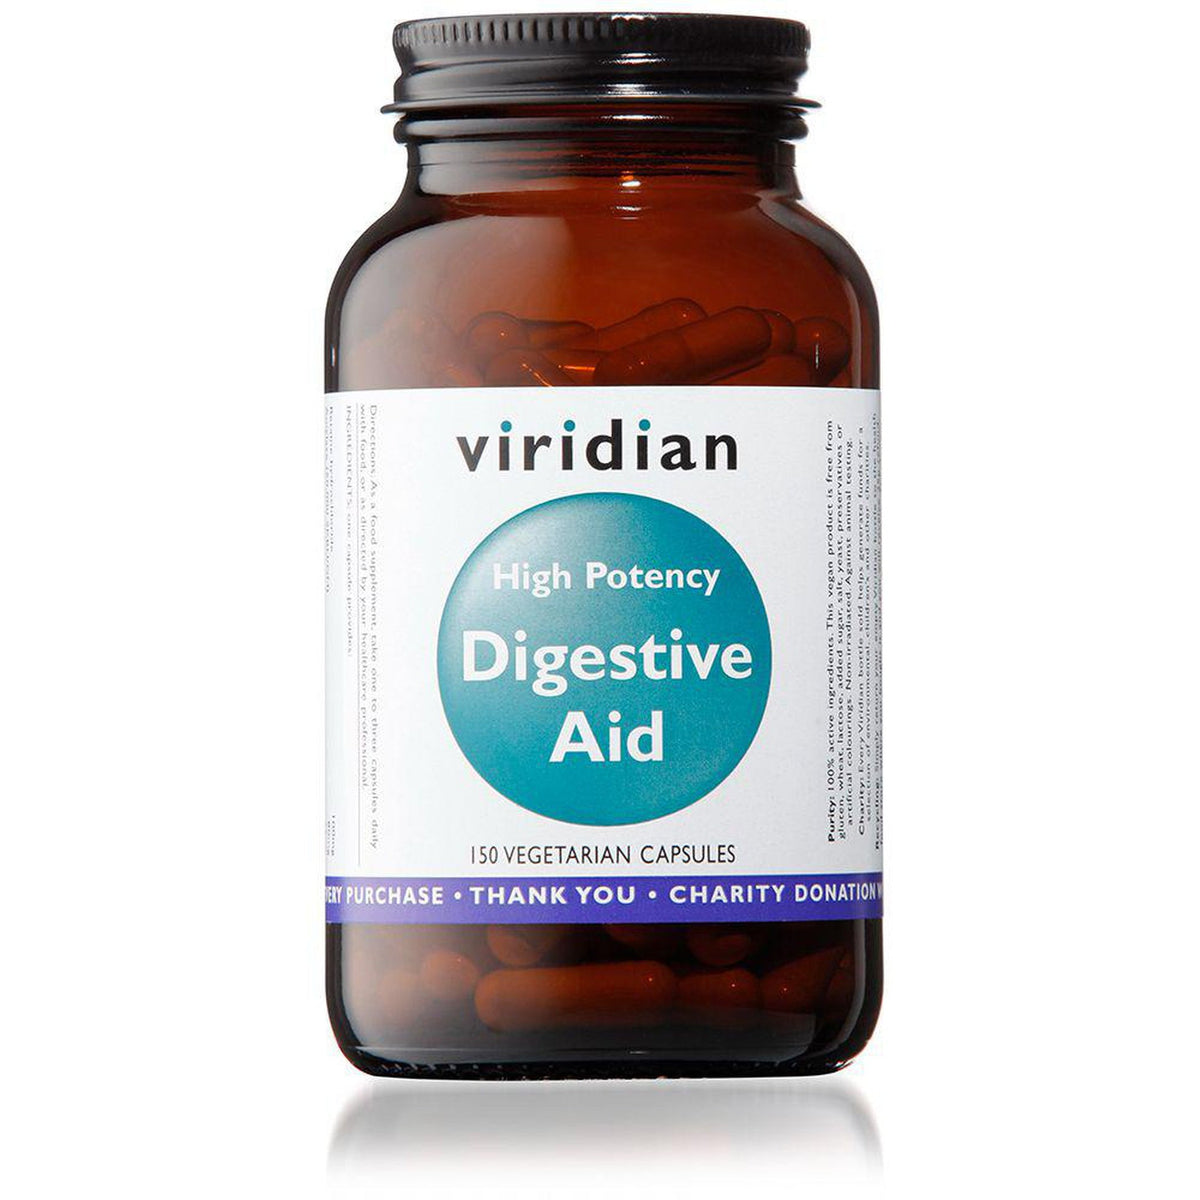 Viridian Hi Potency Digestive Aid 150 Veg Caps- Lillys Pharmacy and Health Store